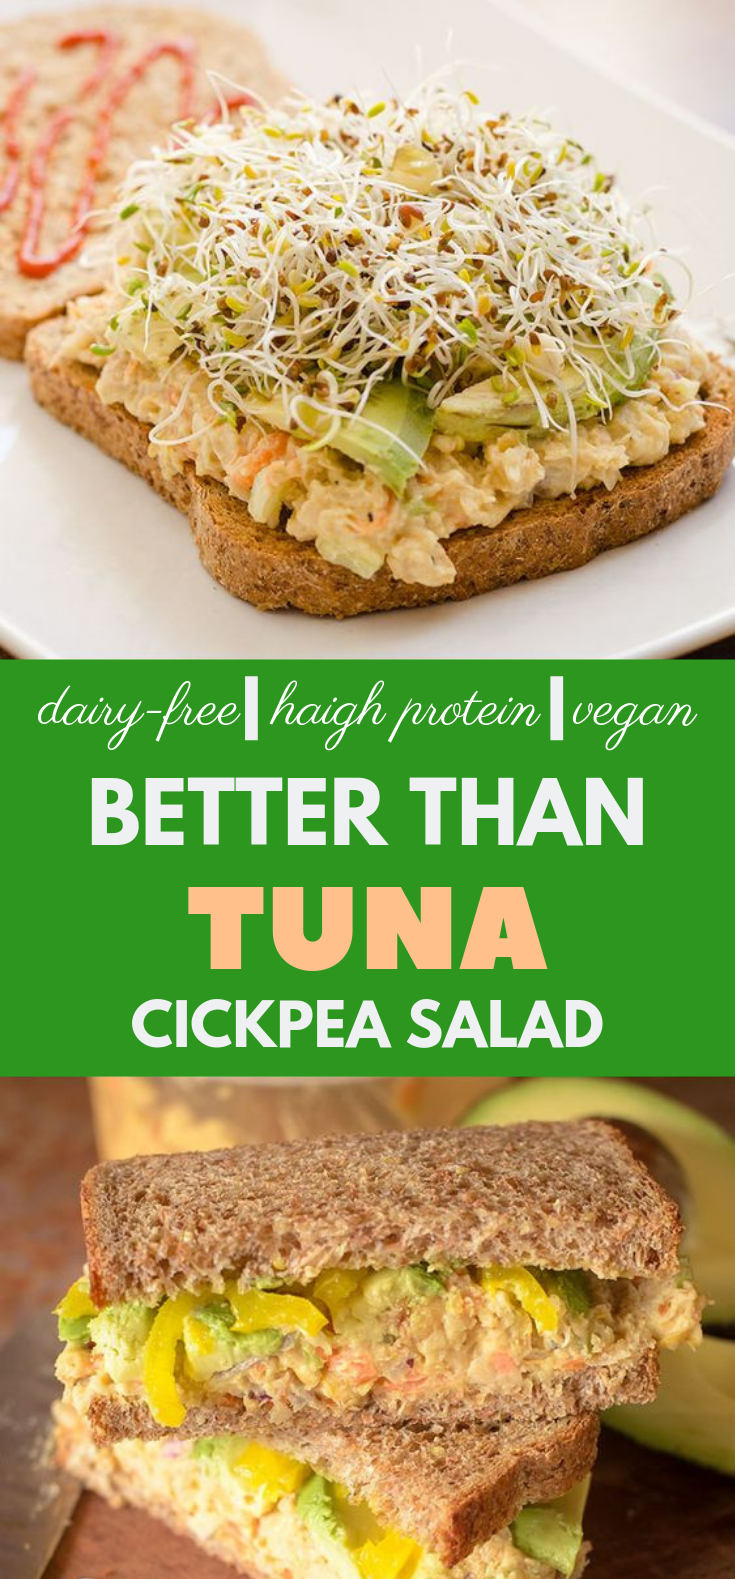 Better than Tuna: Vegan Tuna Salad #Tuna #Vegan